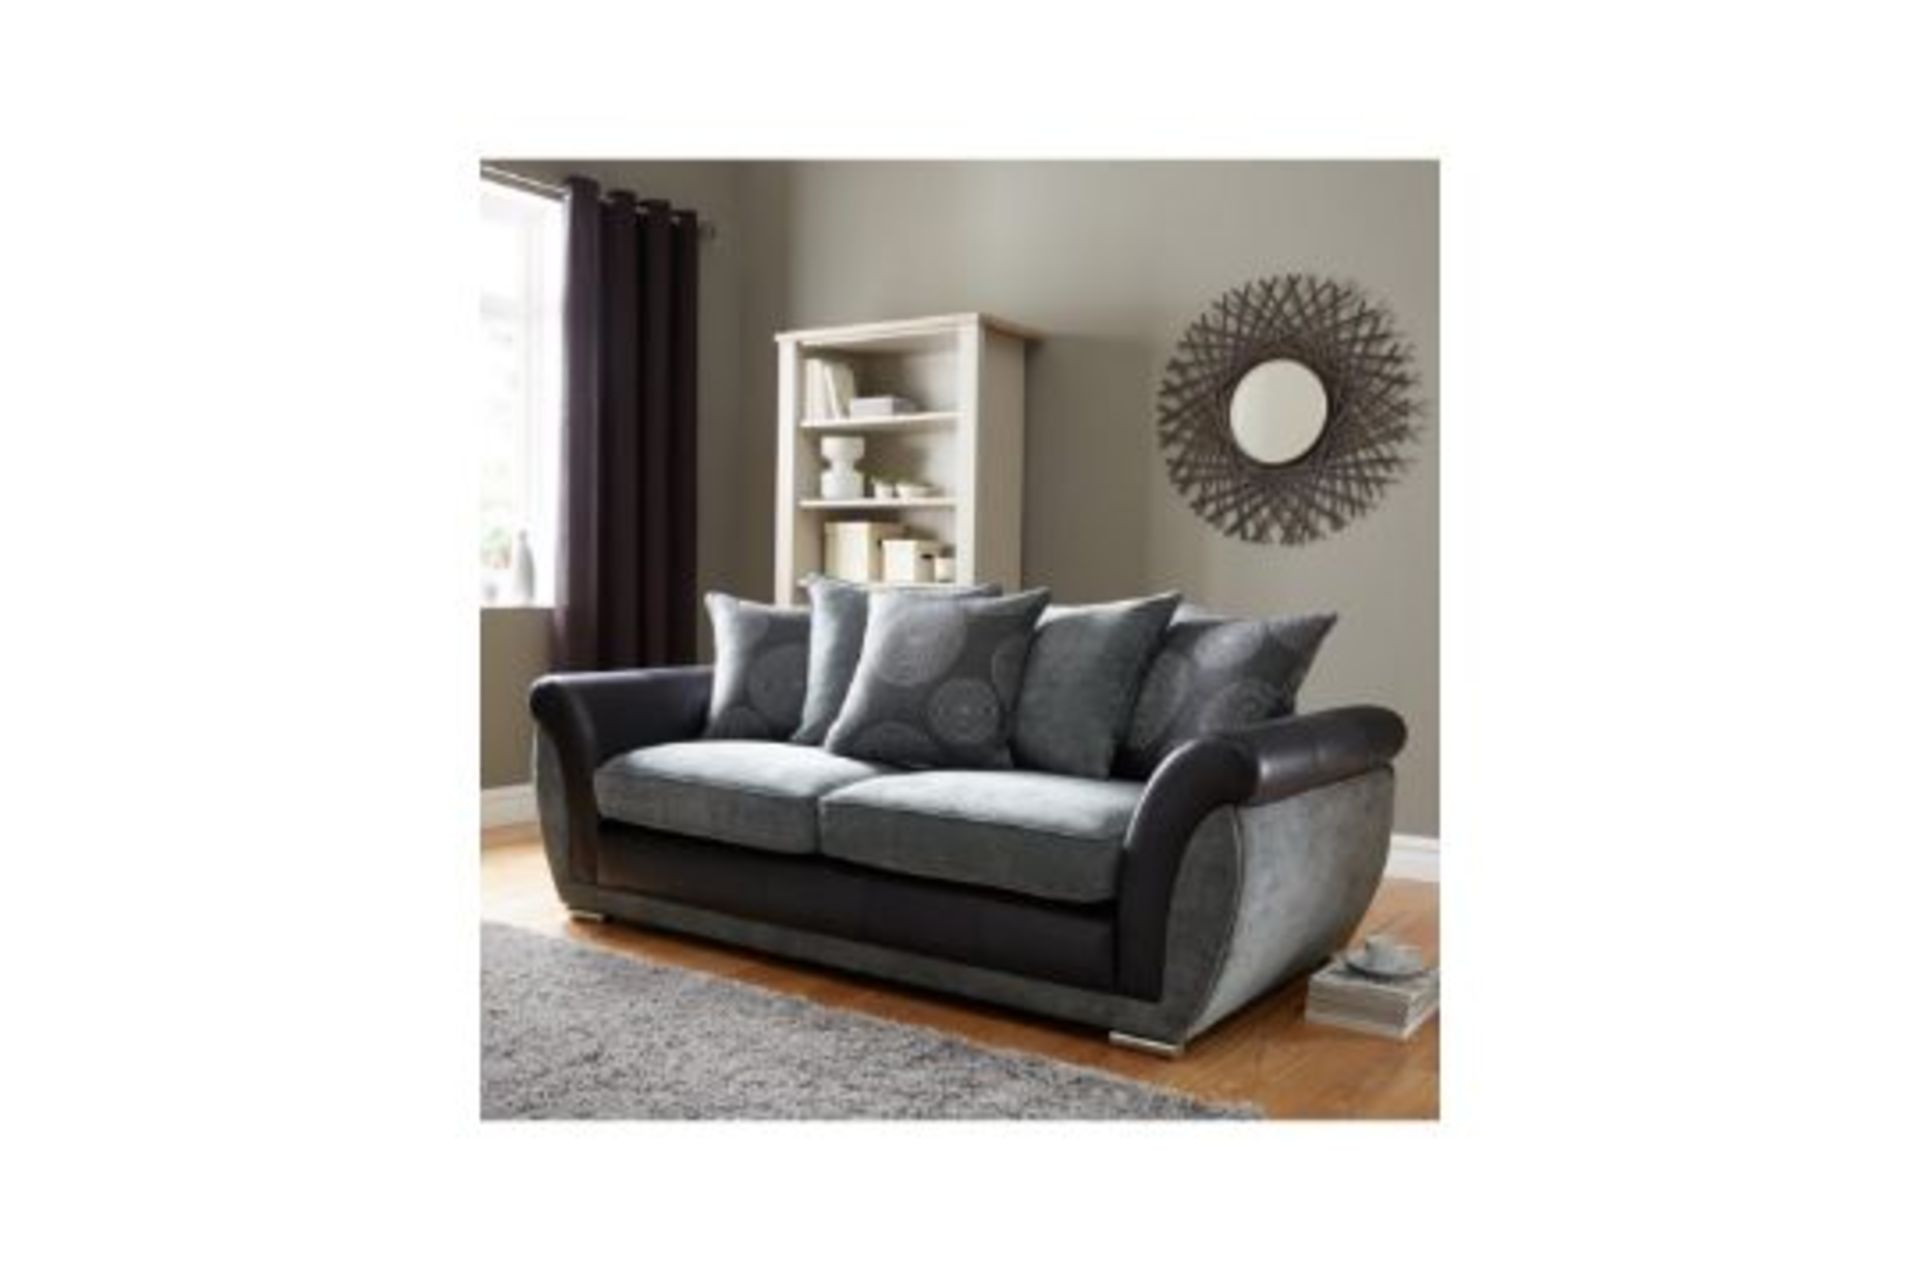 Danube 3 Seater Sofa. BLACK/GREY RPP £649.00. 90 x 219 x 94 cm, Fashionable Soft woven upholstery